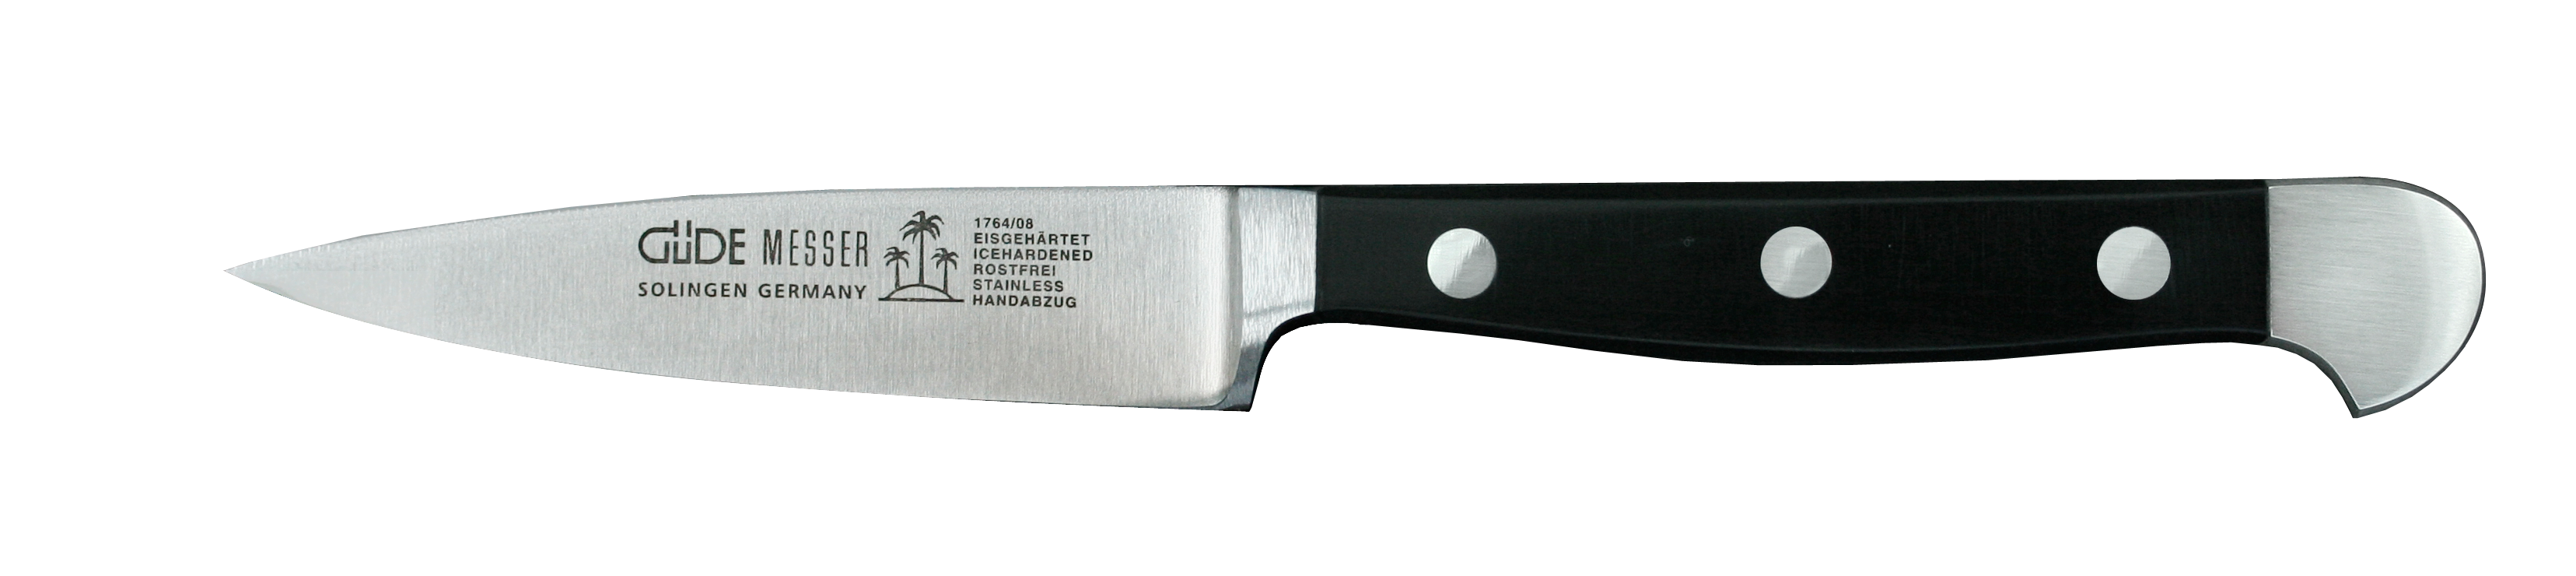 Güde Alpha Spickmesser 8 cm / CVM-Messerstahl mit Griffschalen aus Hostaform